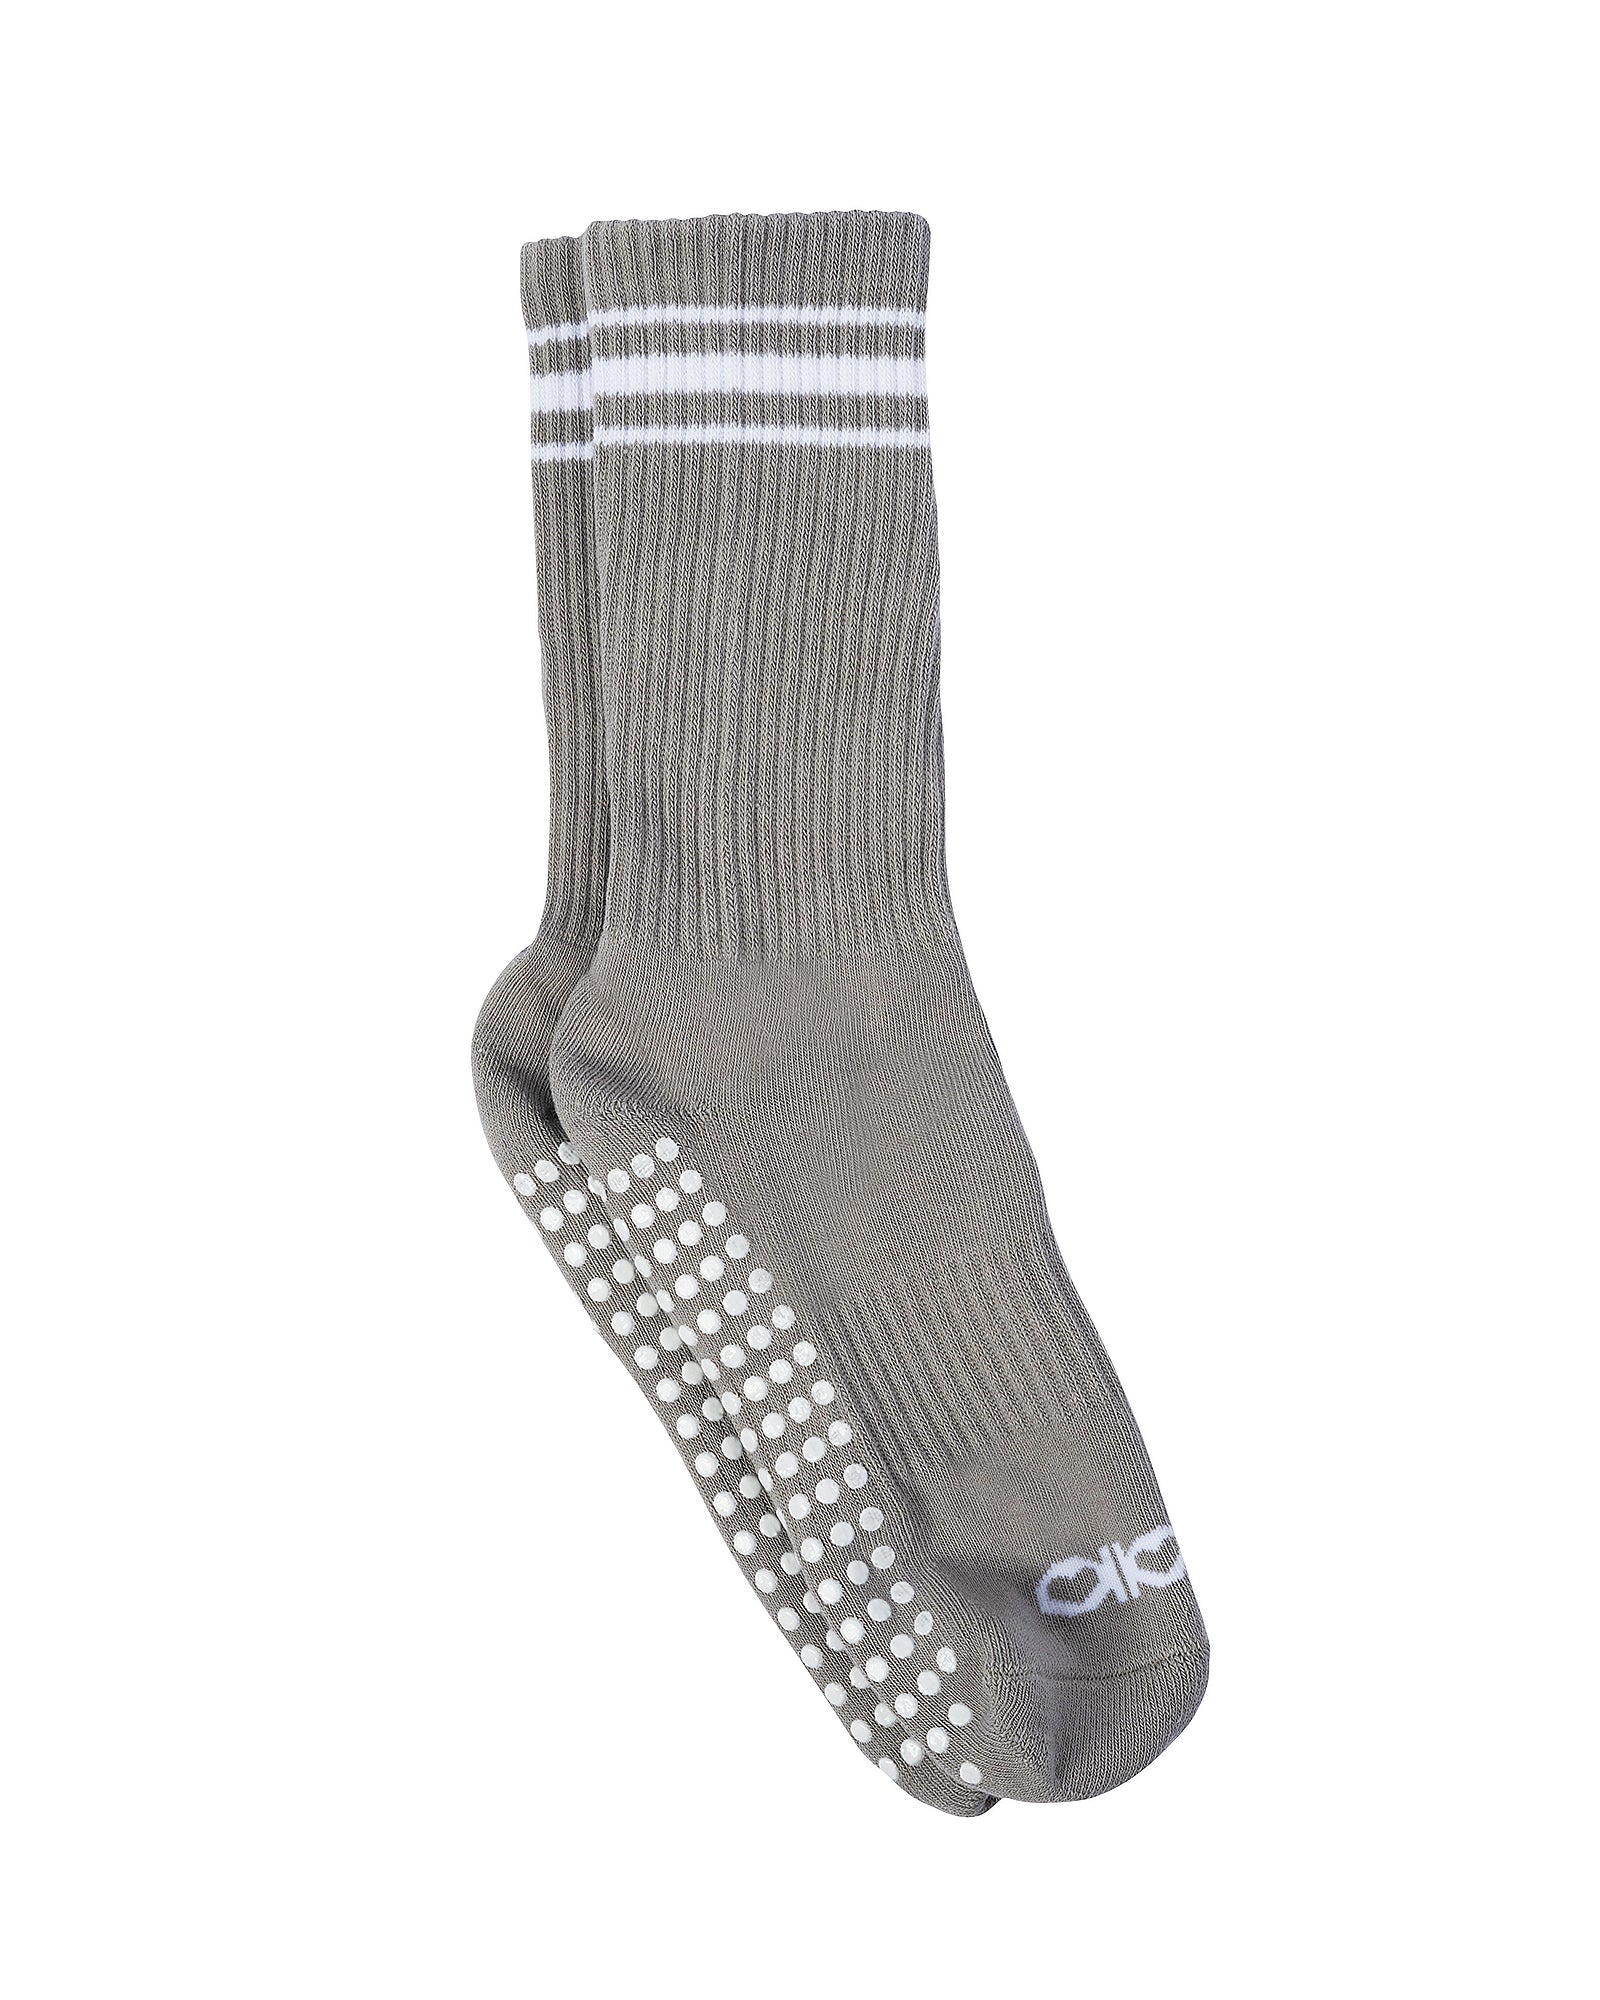 Classic Grey Grip Socks